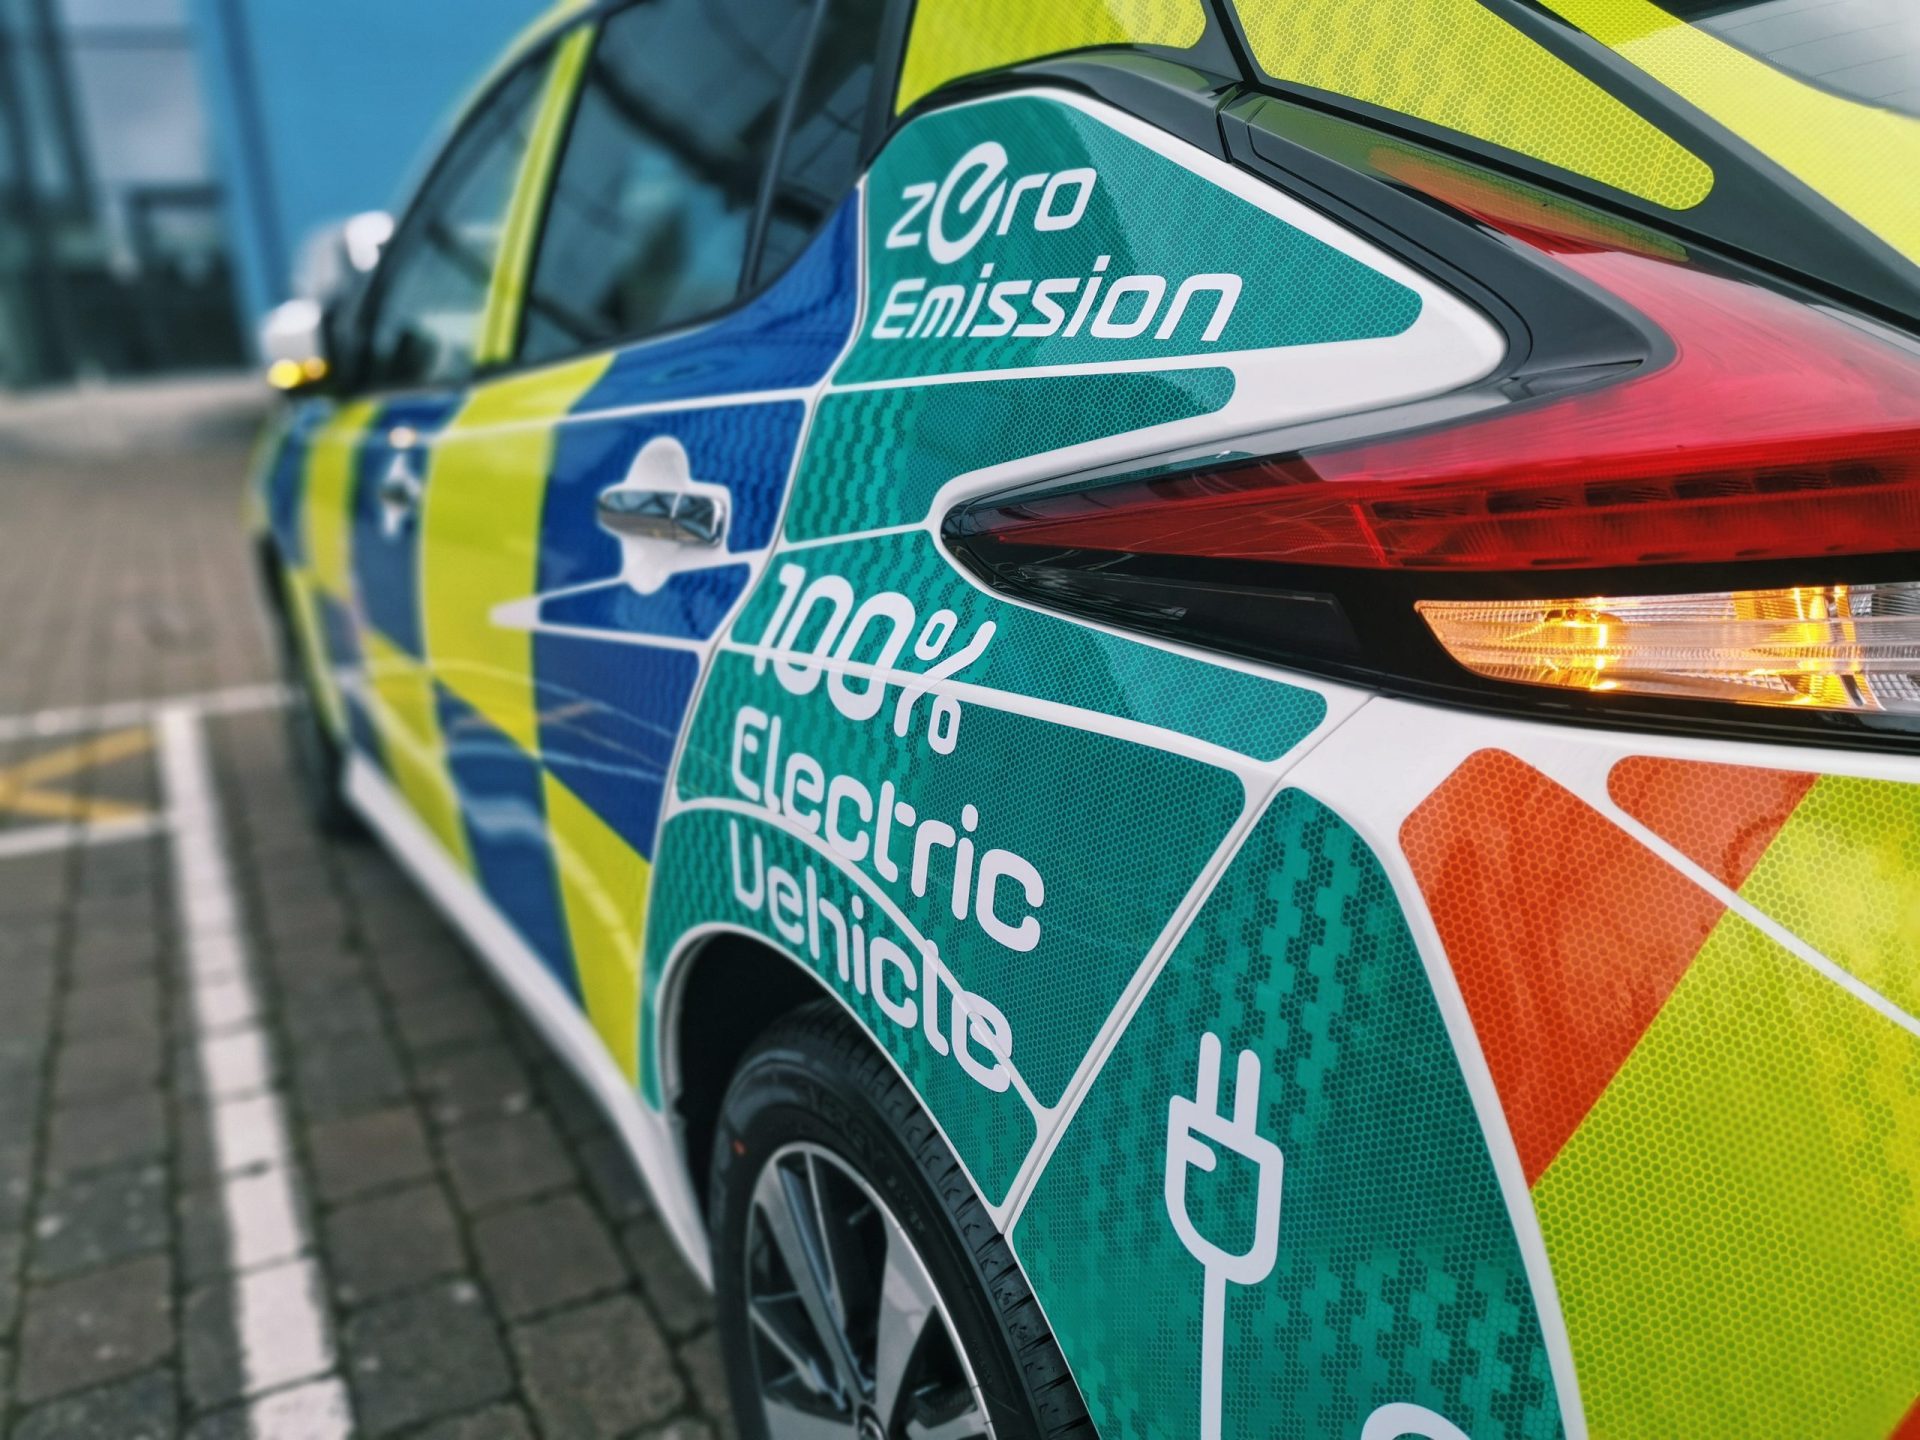 UK electric police car